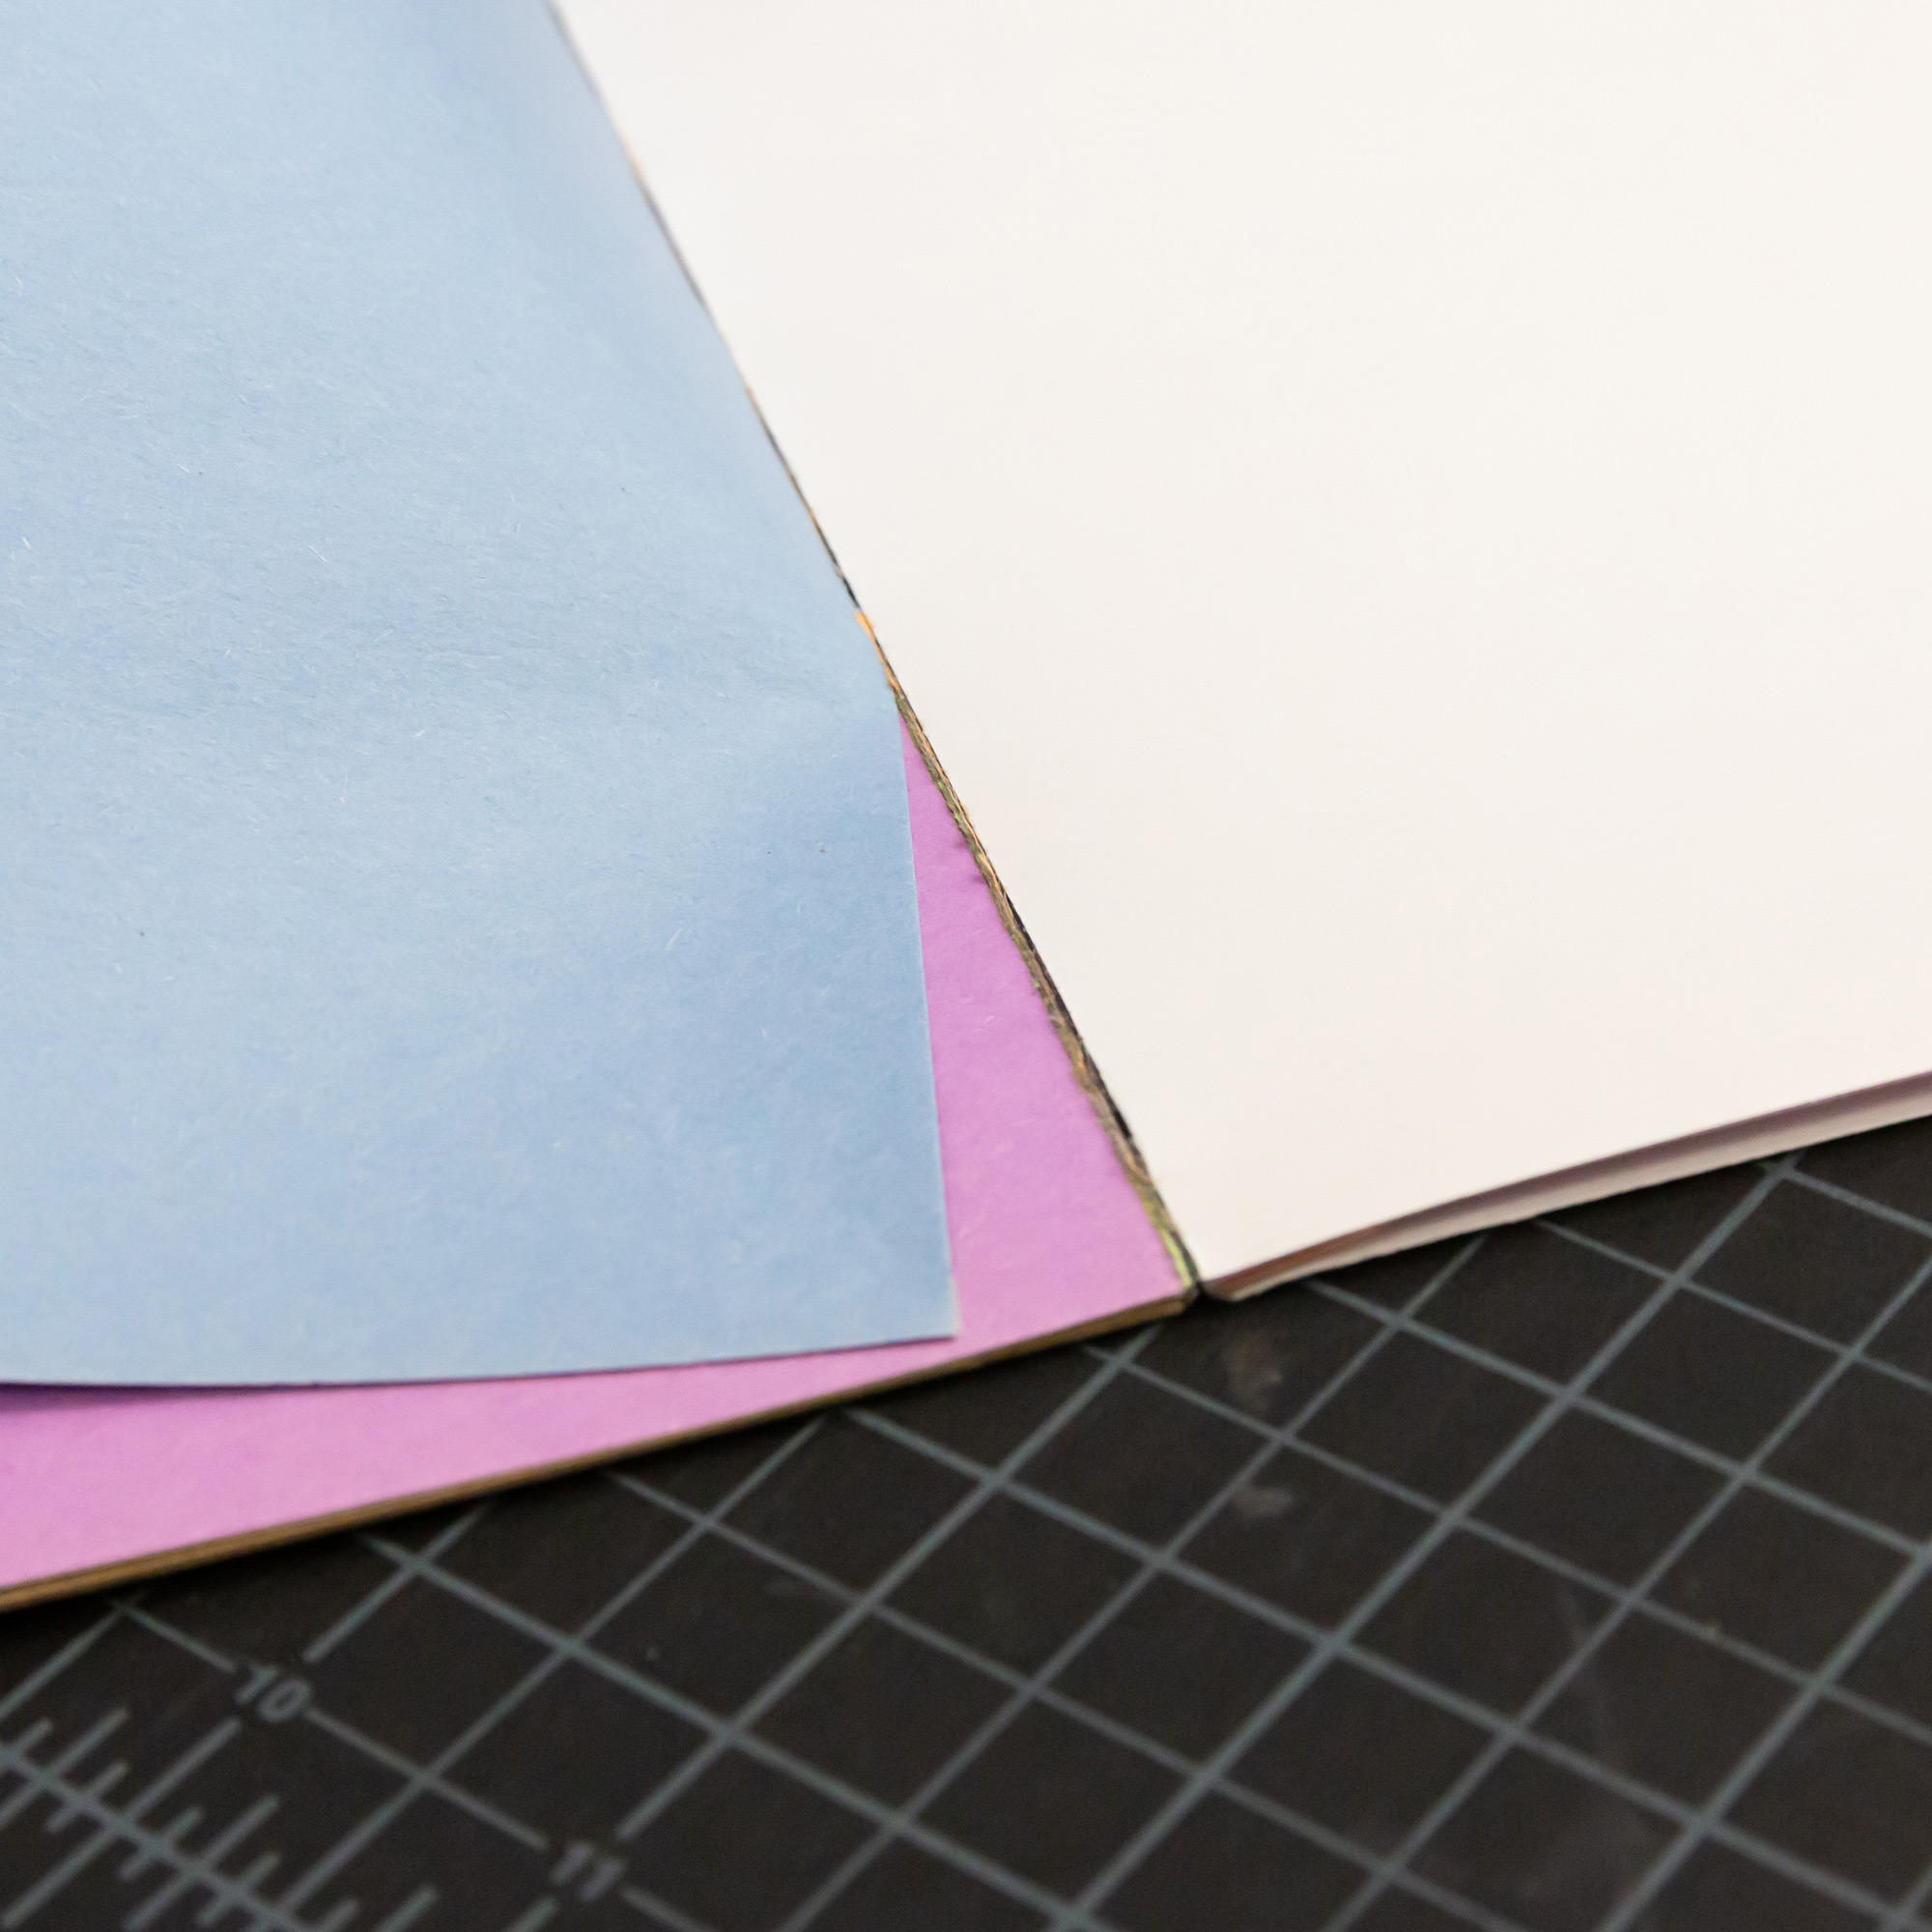 Bulk 5600 Pc. Makerspace Tissue Paper Assortment